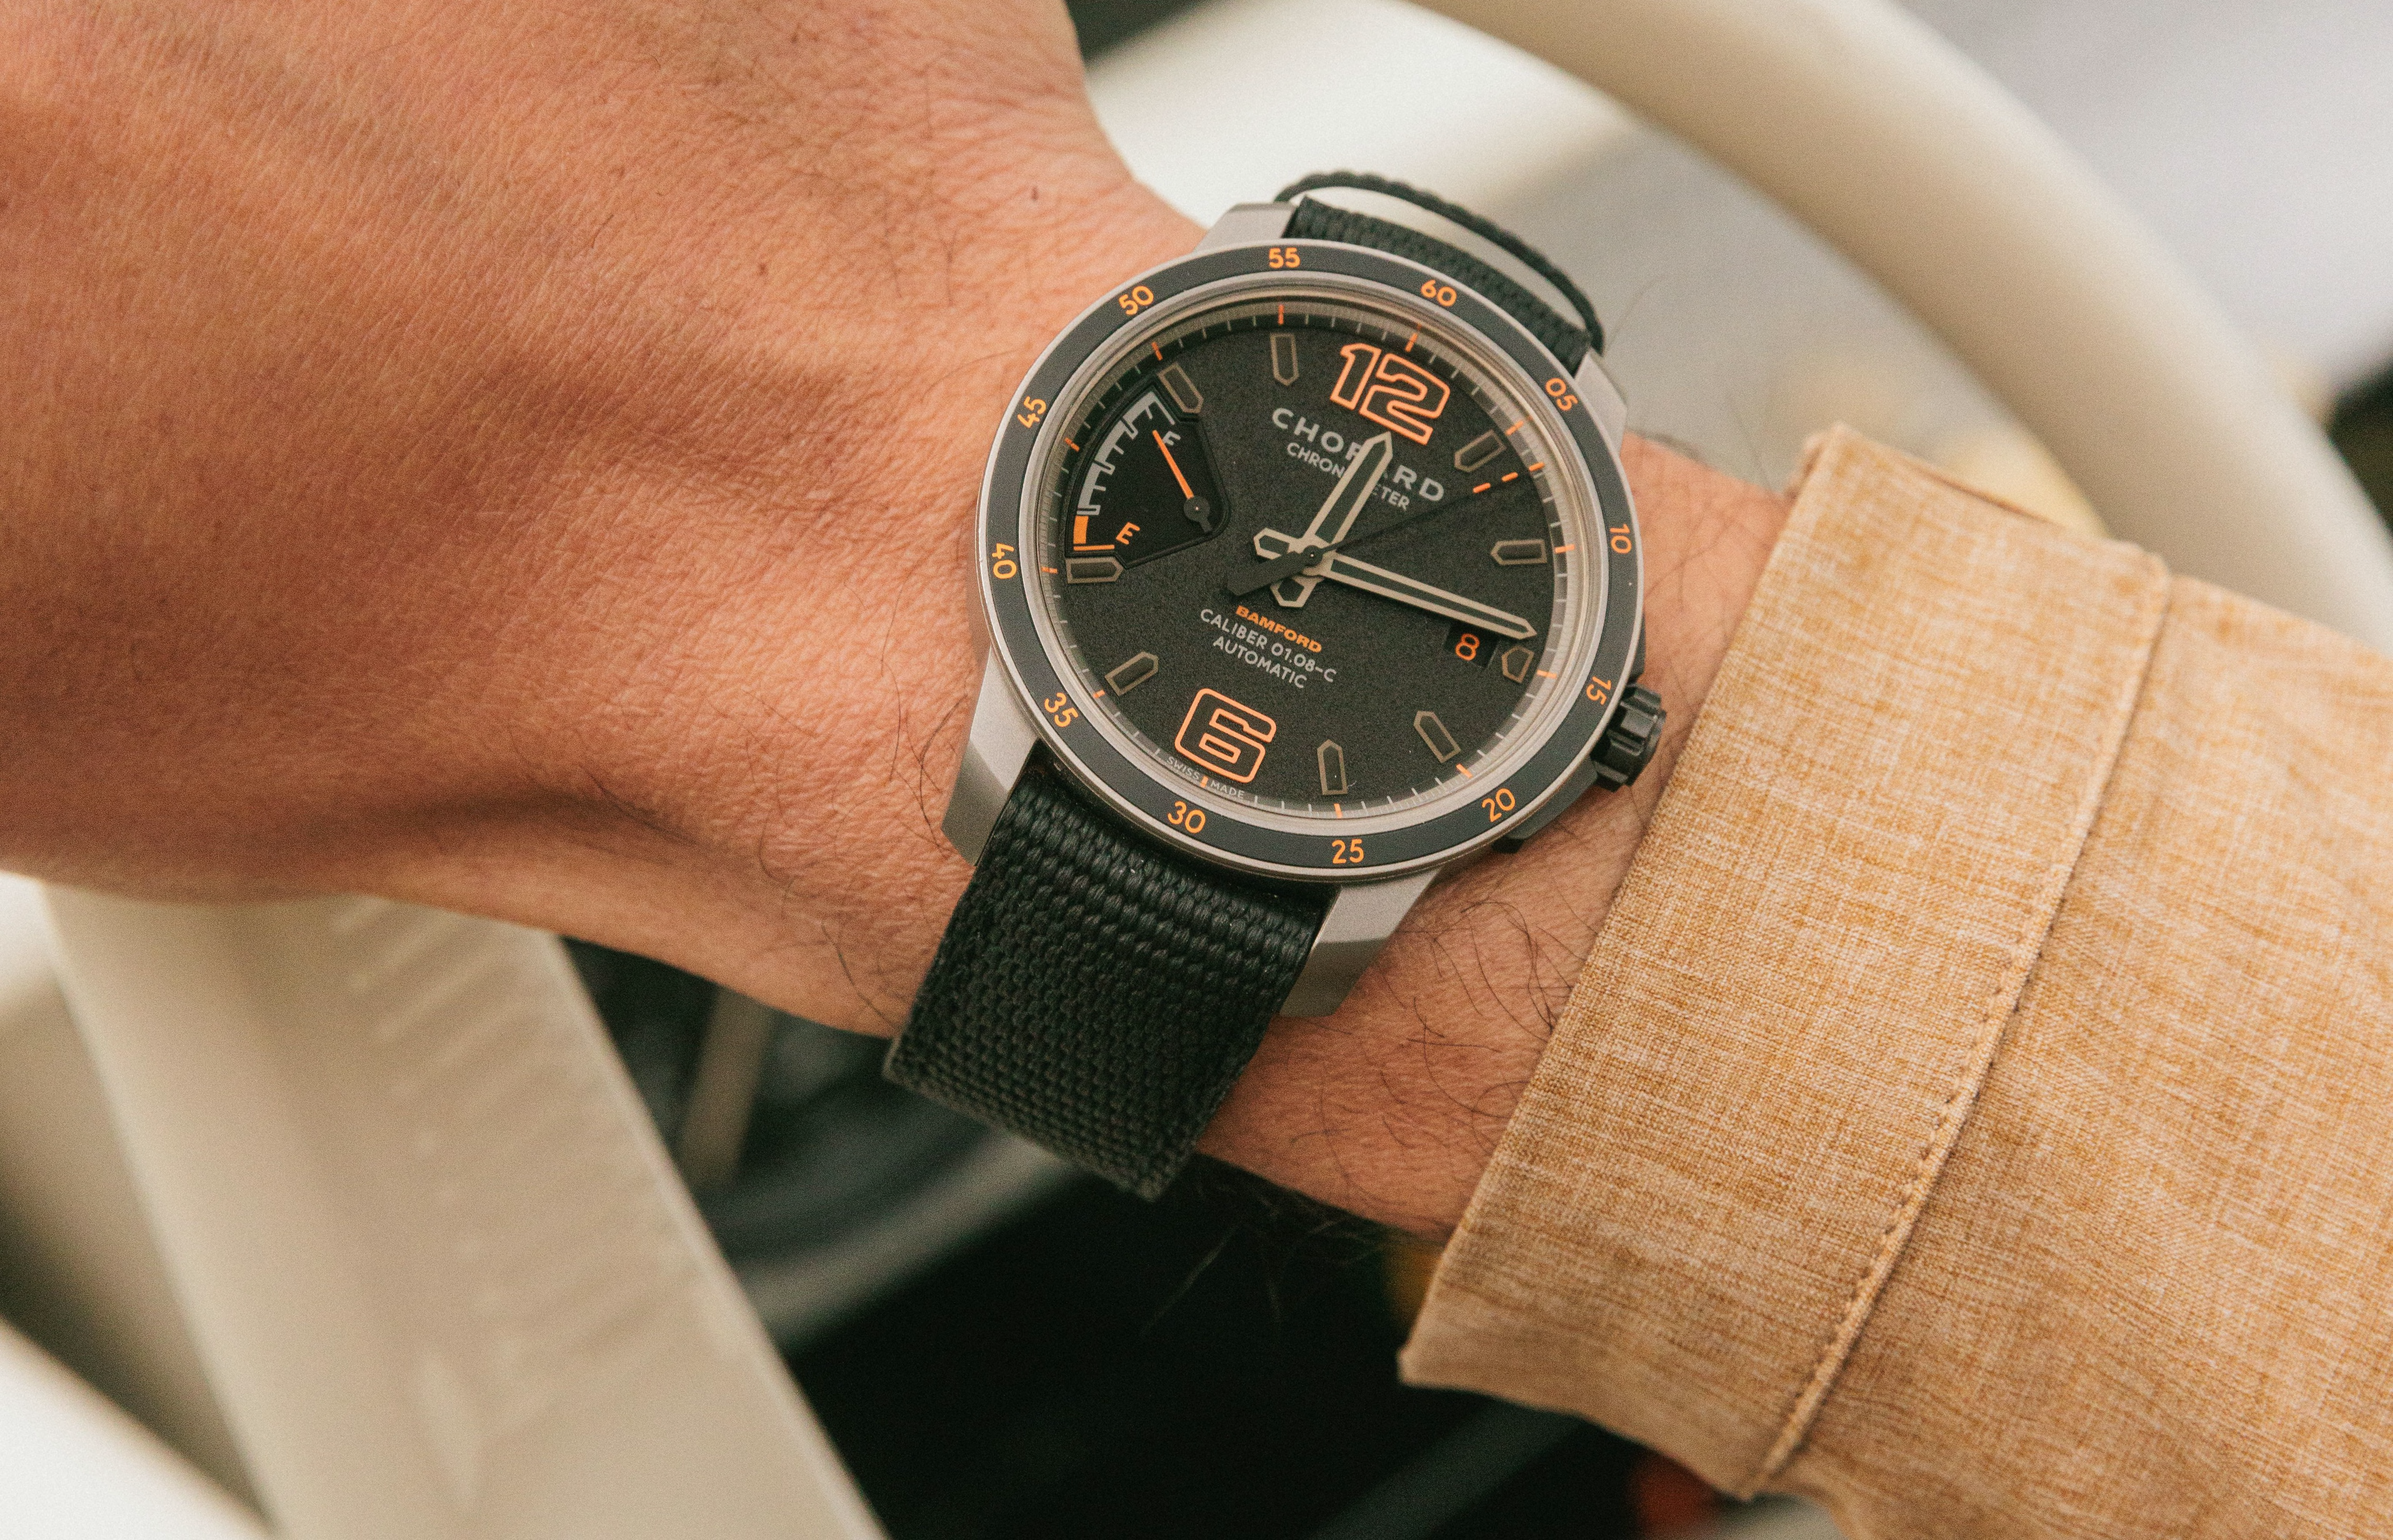 Mille Miglia luxury sports watch for men